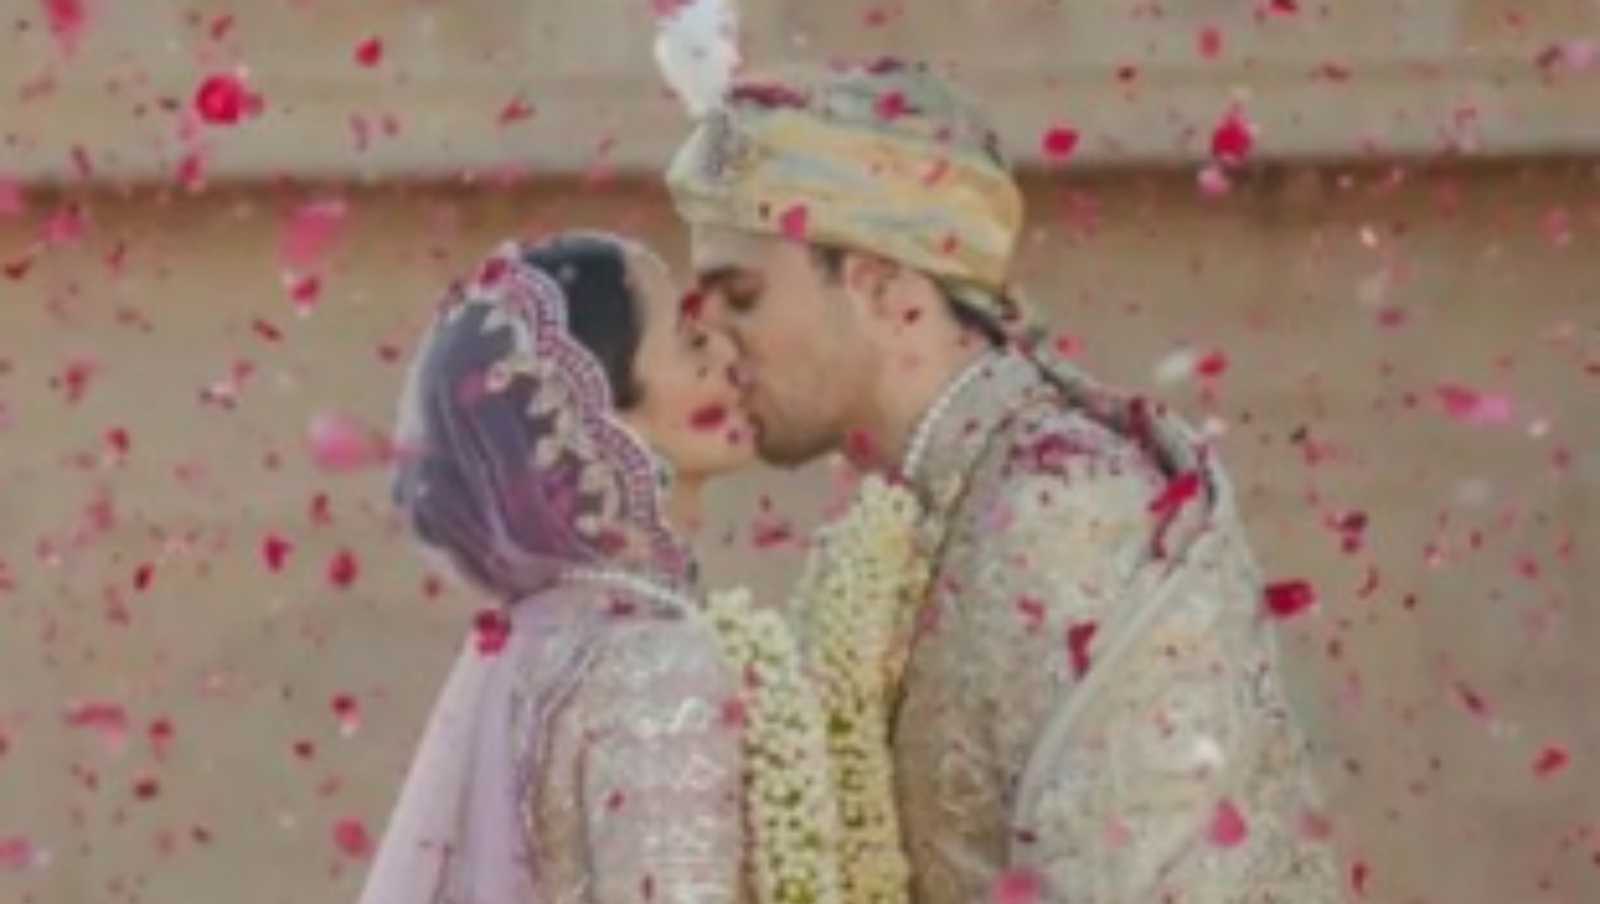 Sidharth Malhotra and Kiara Advani gave their heartbreak song Ranjha a beautiful twist for their wedding teaser, here's how